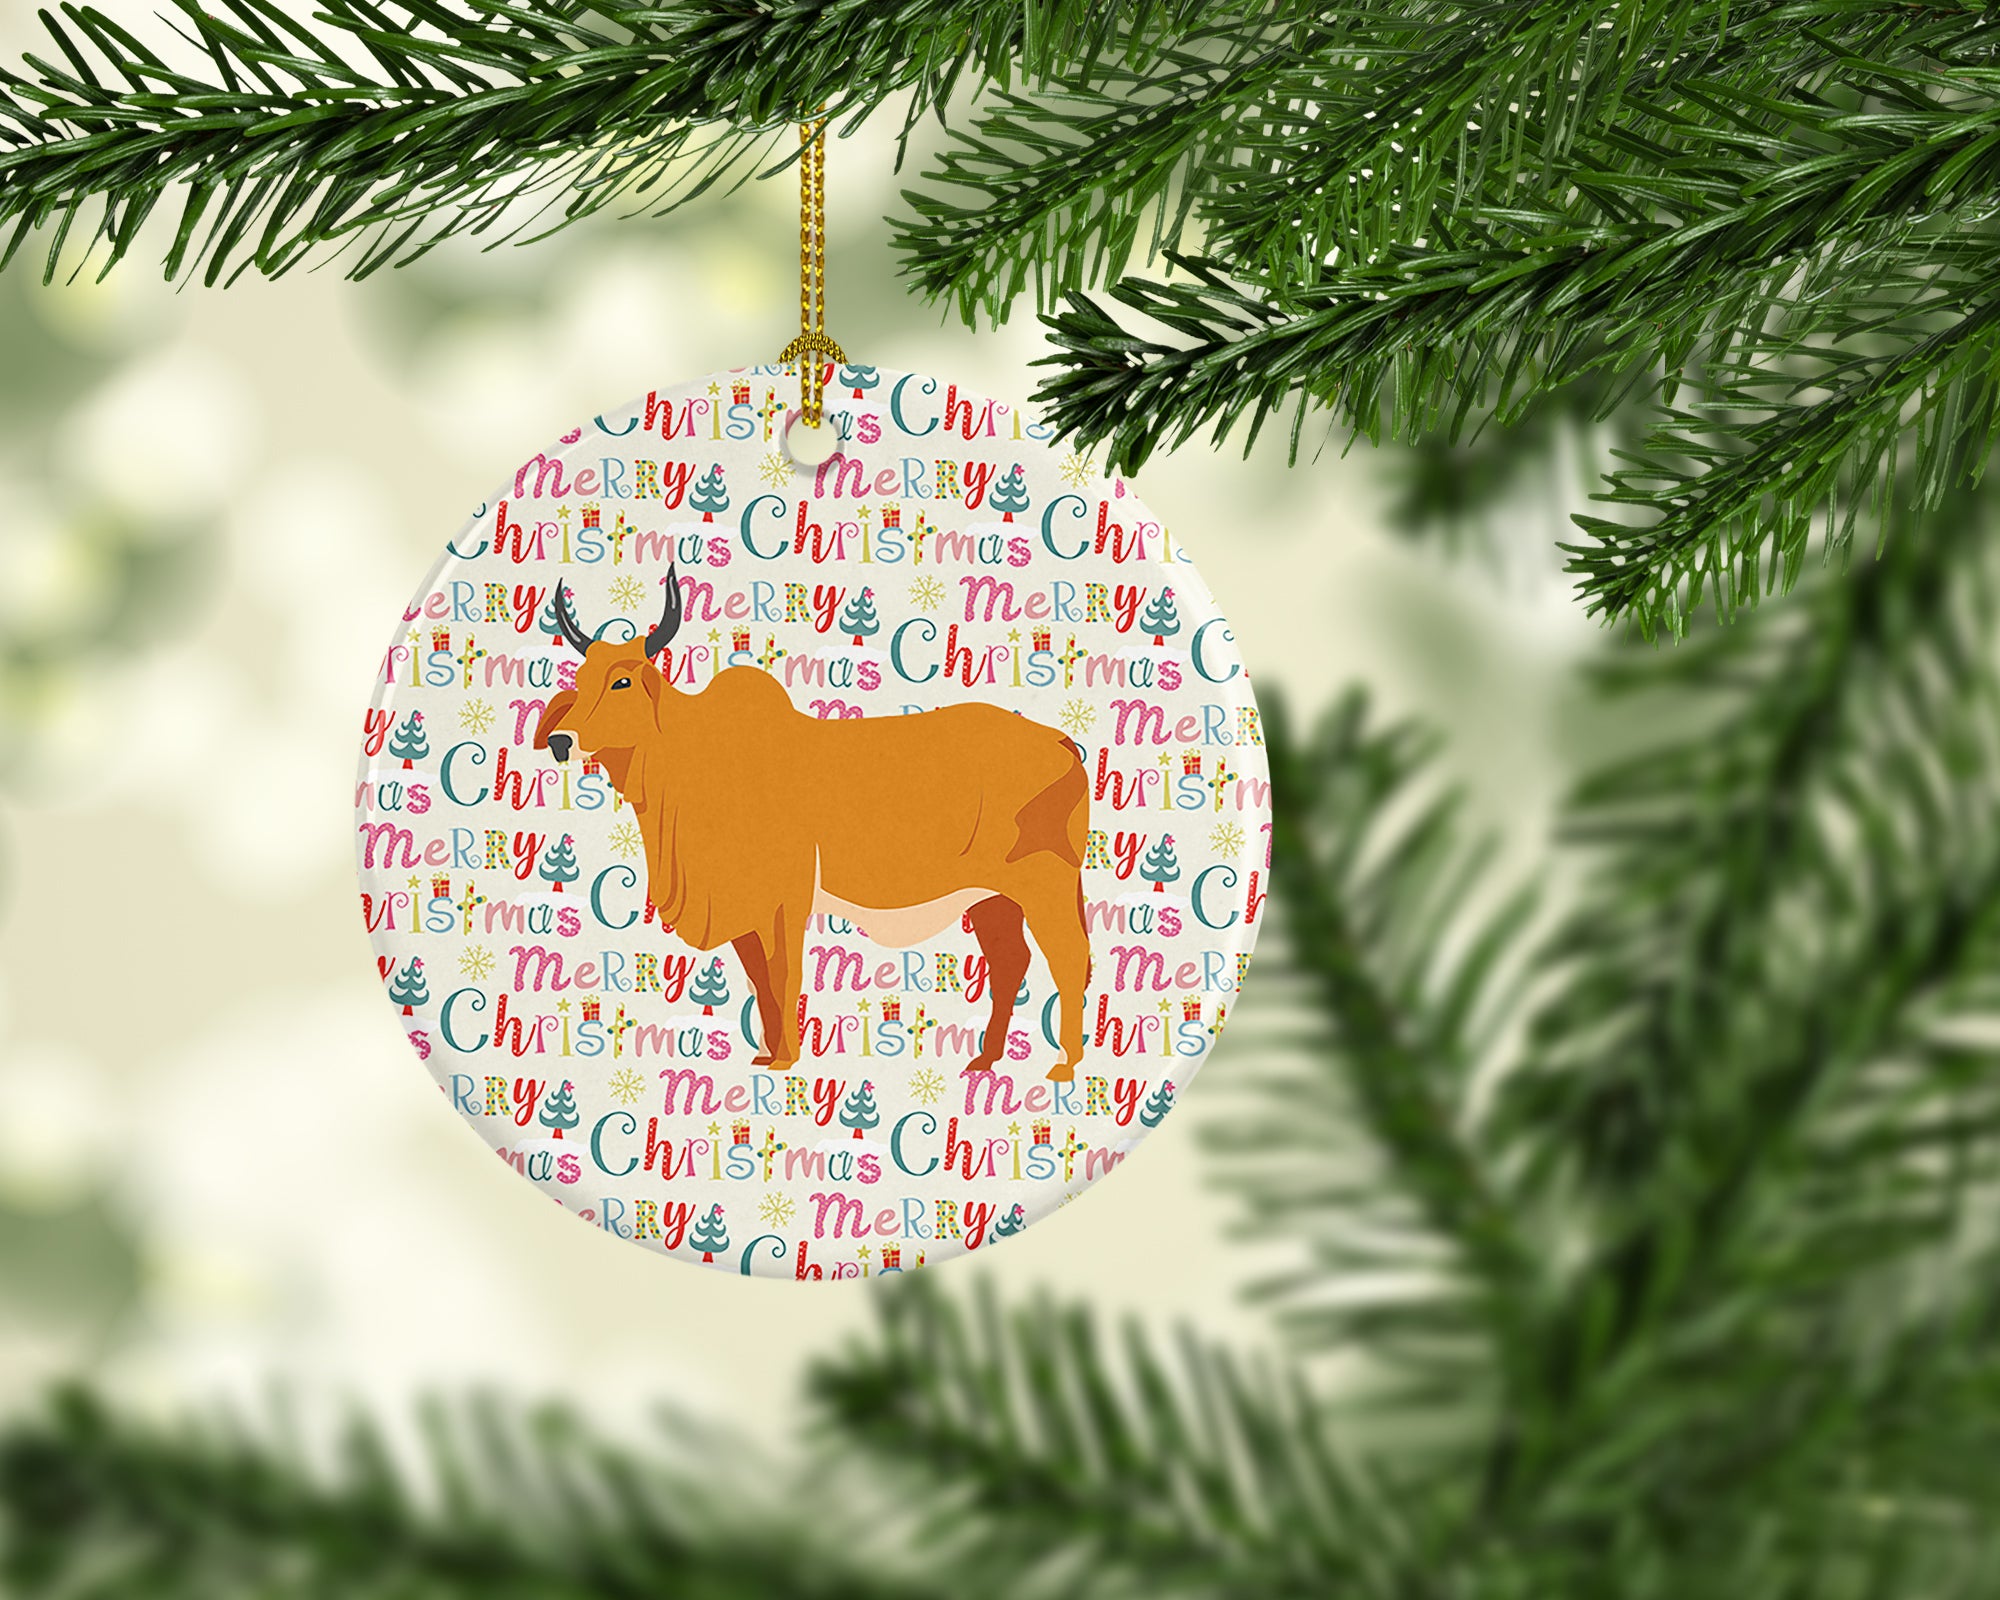 Buy this Zebu Indicine Cow Christmas Ceramic Ornament